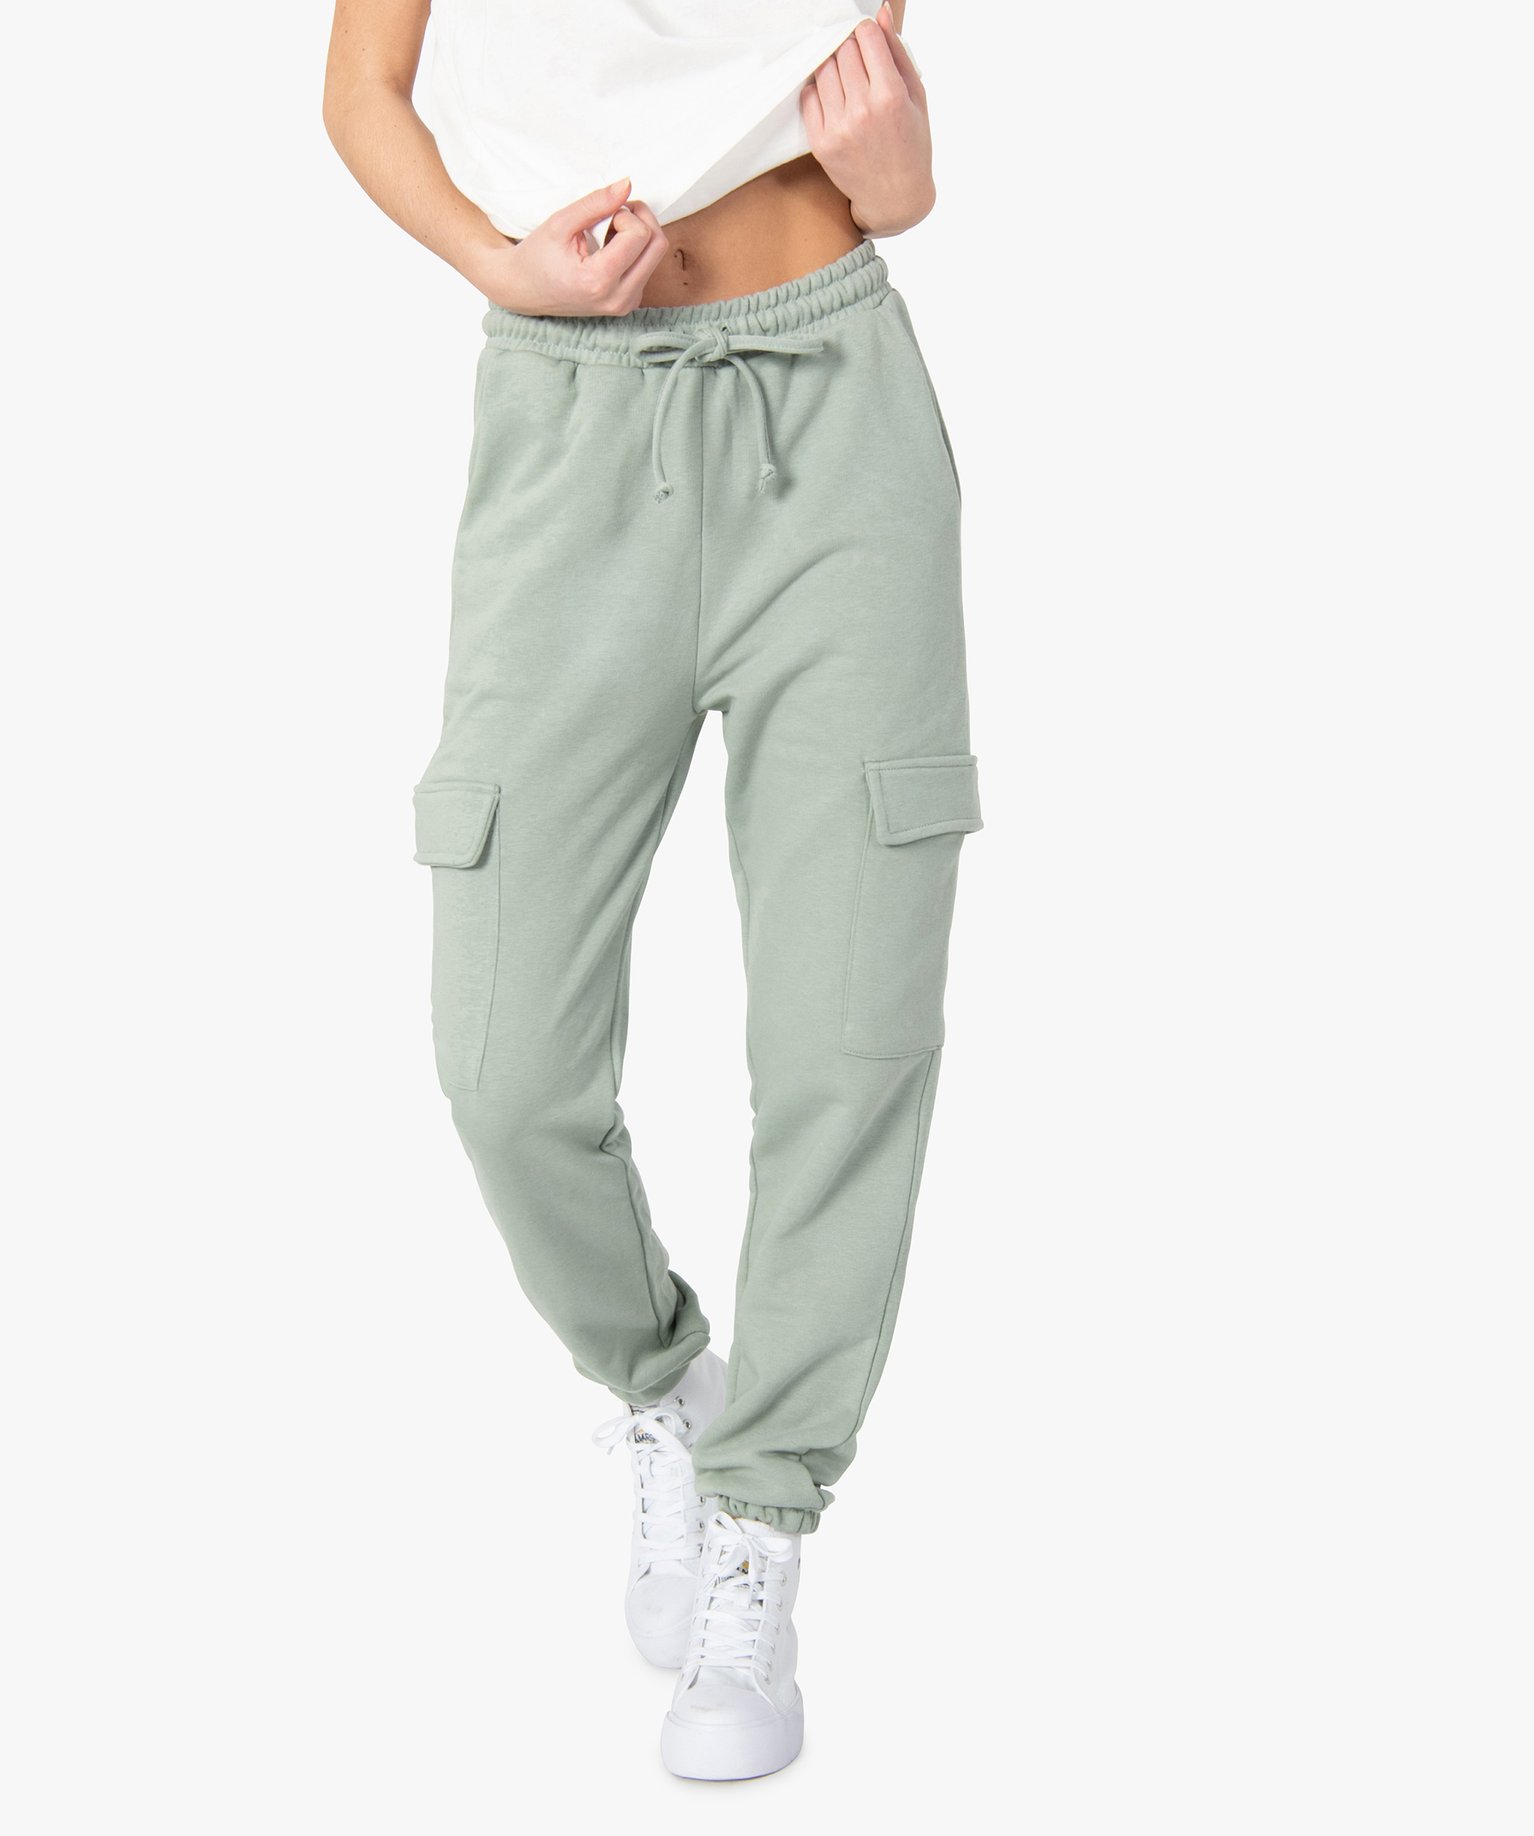 pantalon de jogging femme avec poches a rabat vert pantalons femme